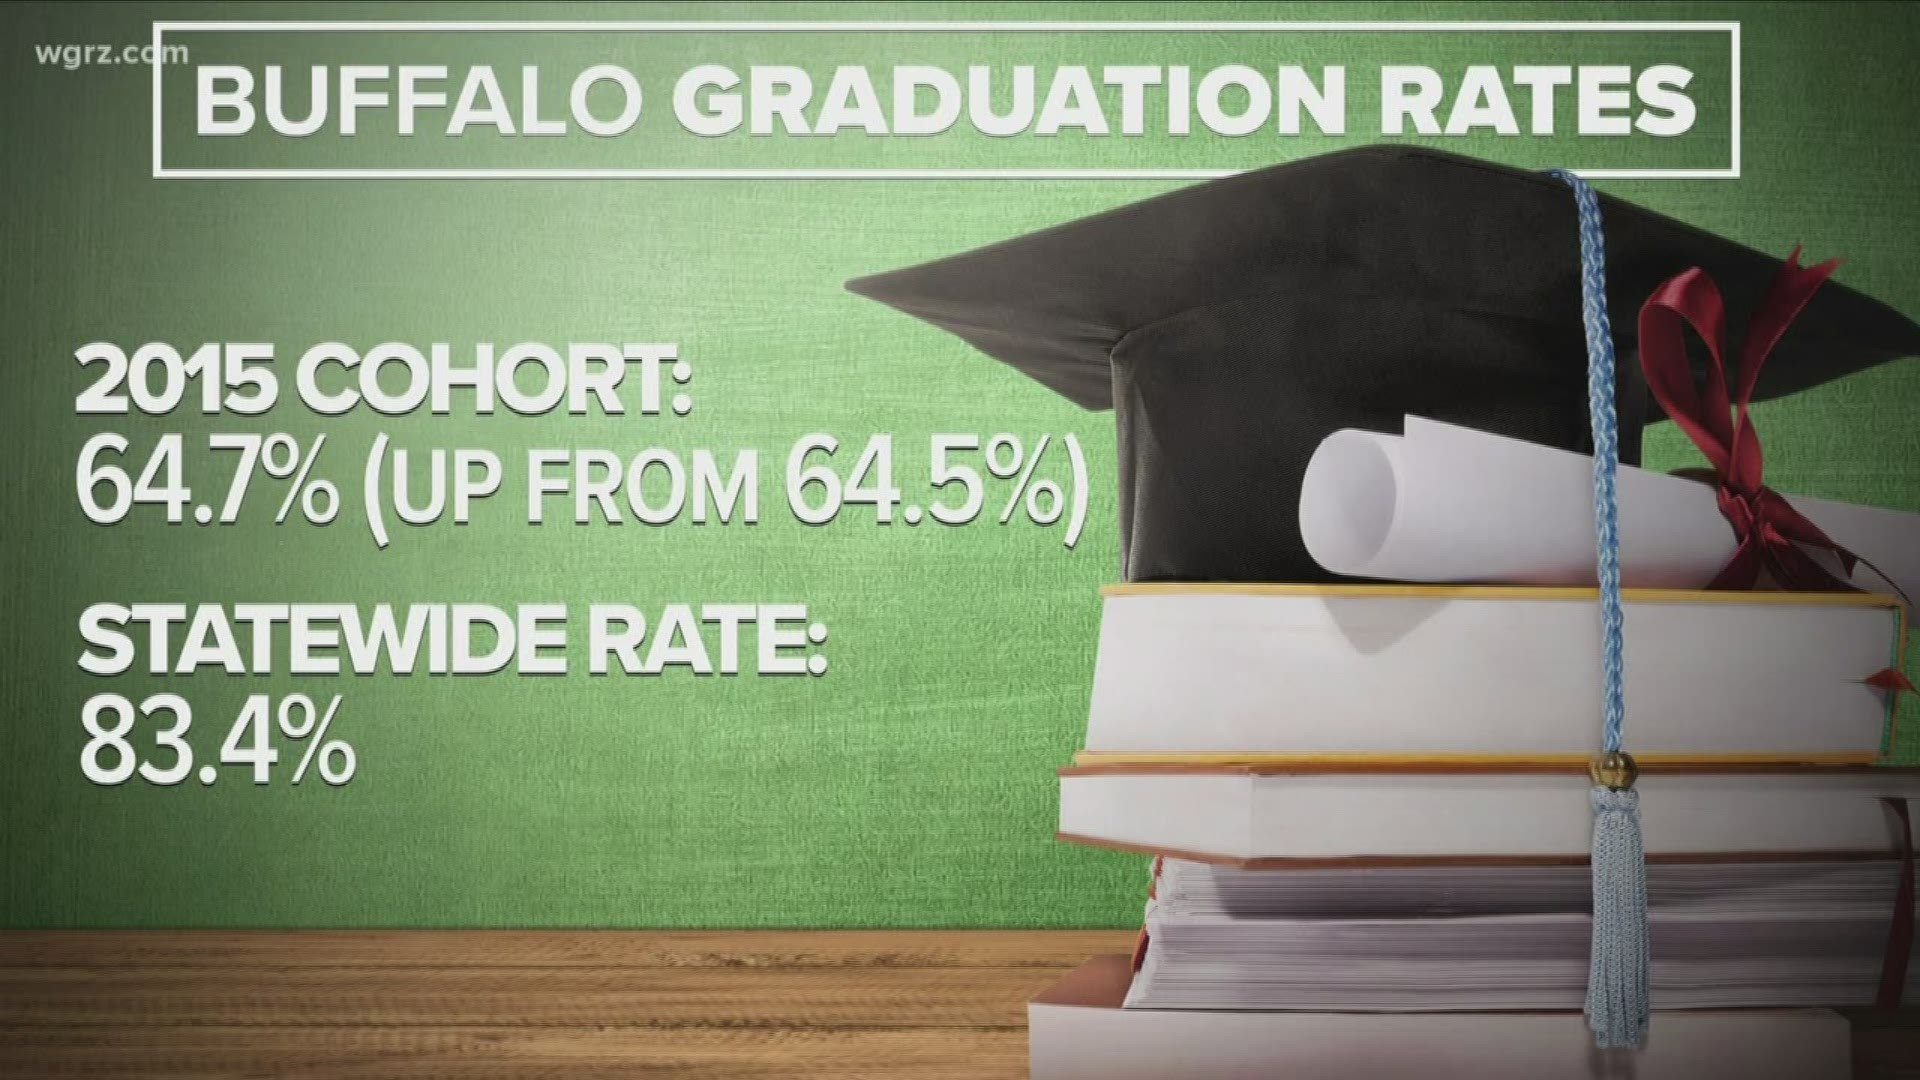 Buffalo Graduation Rates Rise Slightly